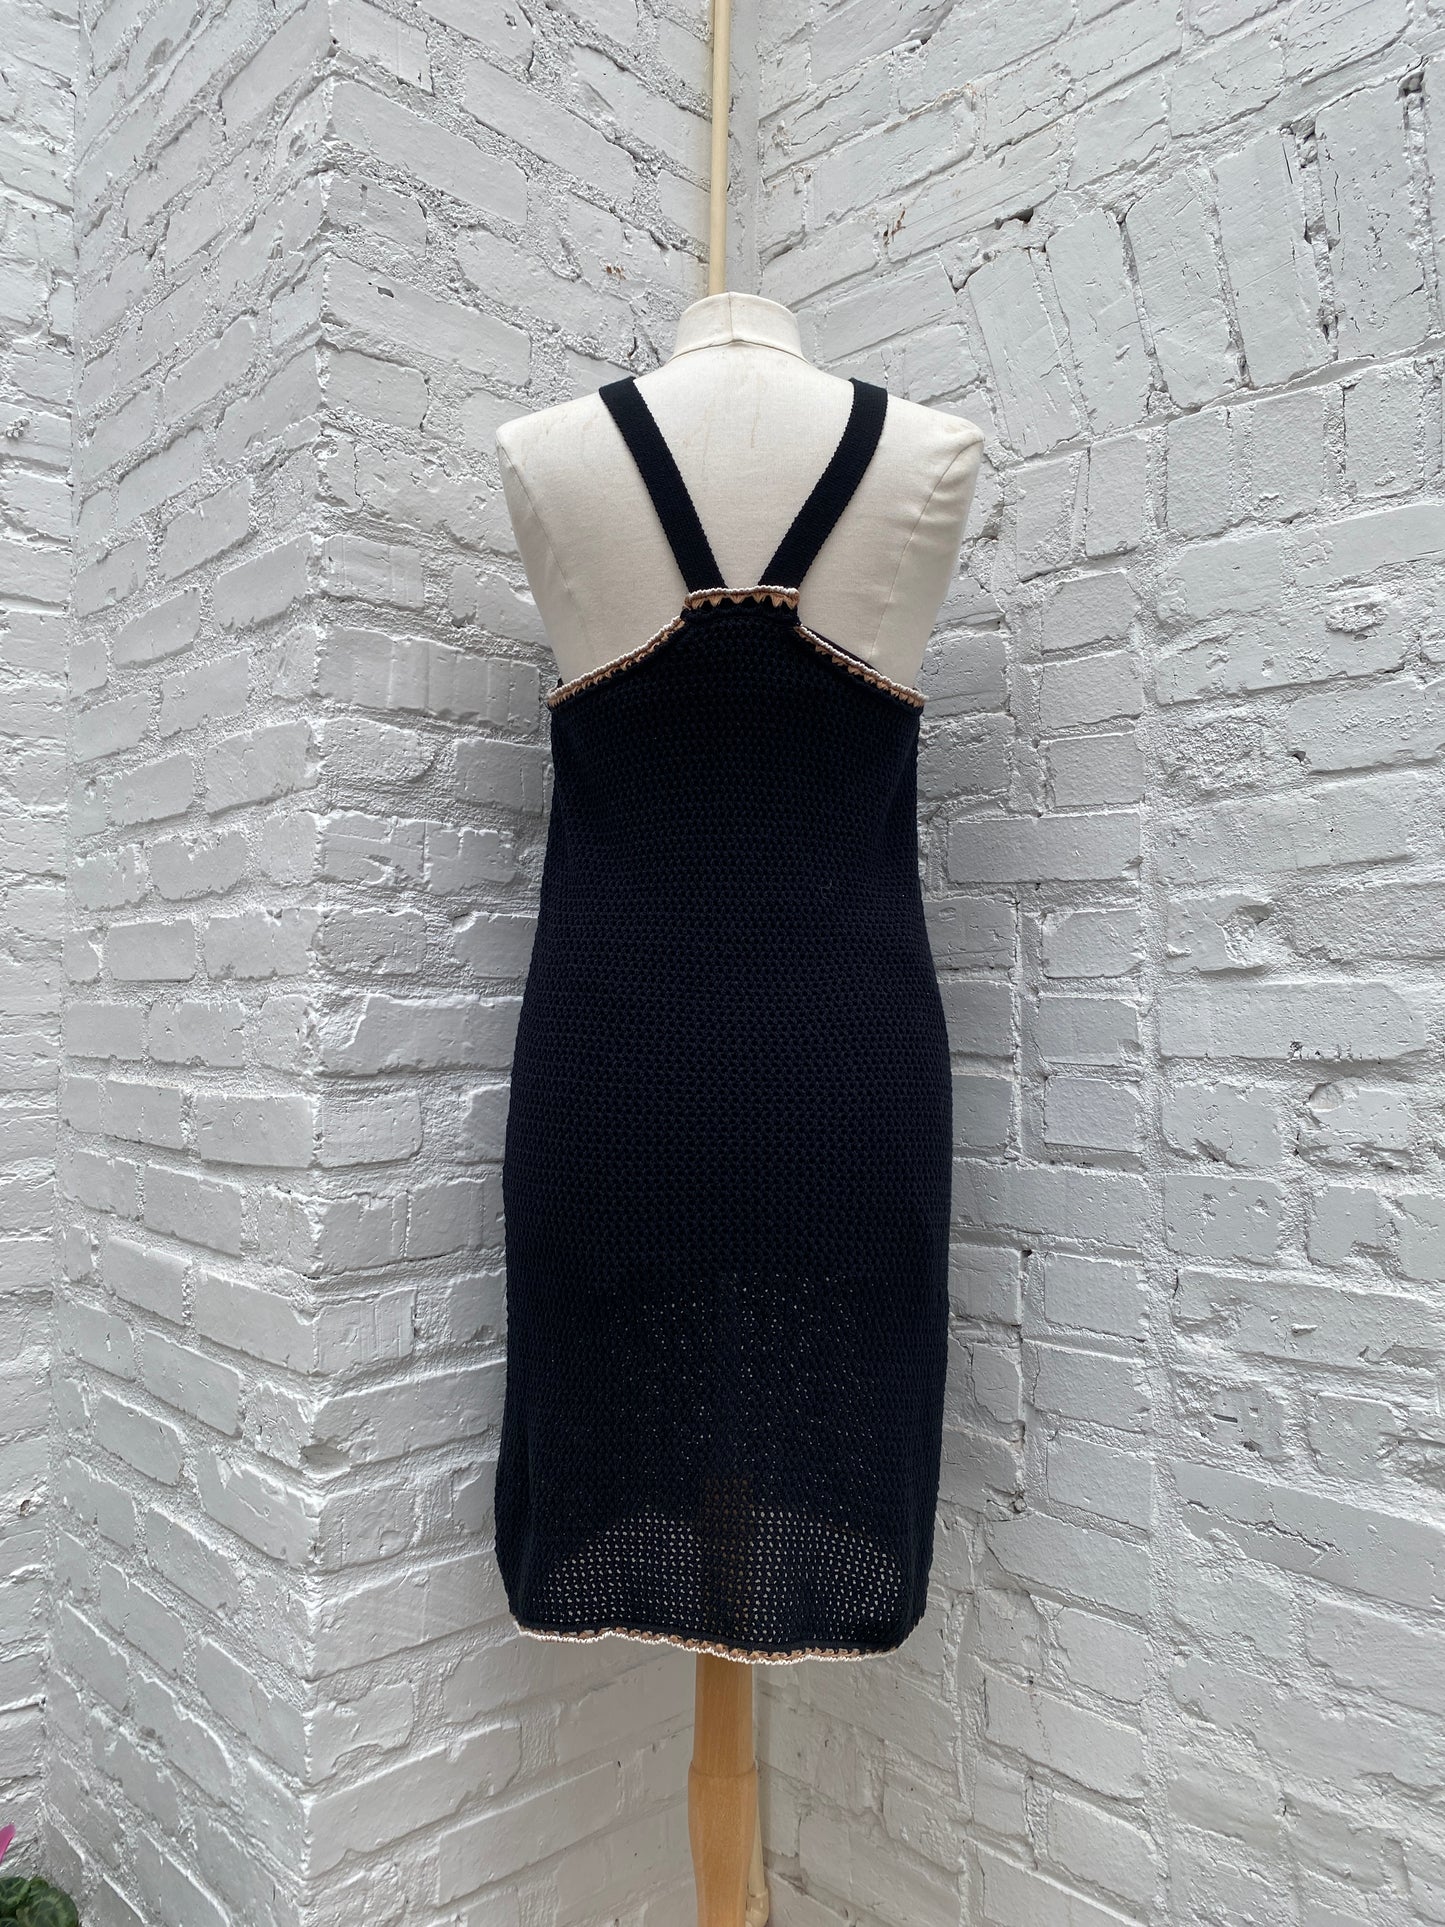 Joie Black Crocheted Dress